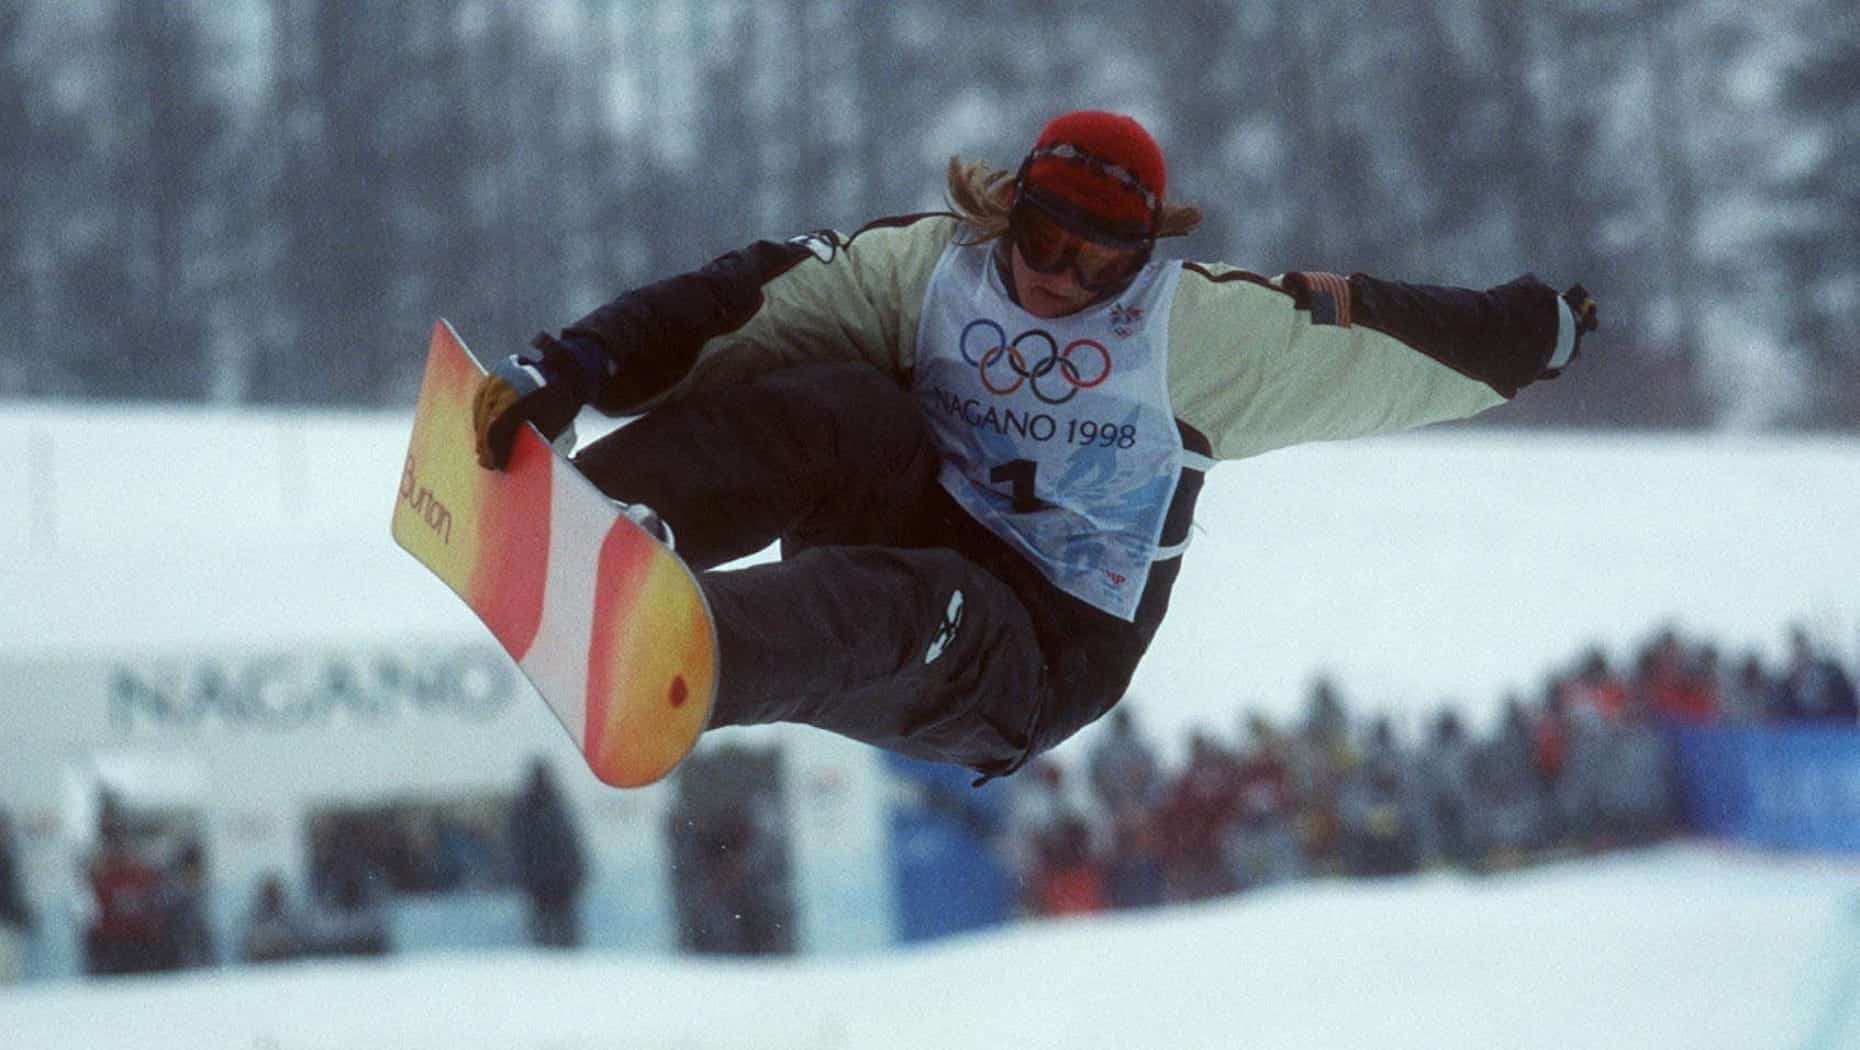 Snowboard Jogos Olímpicos de Inverno de Nagano-1998